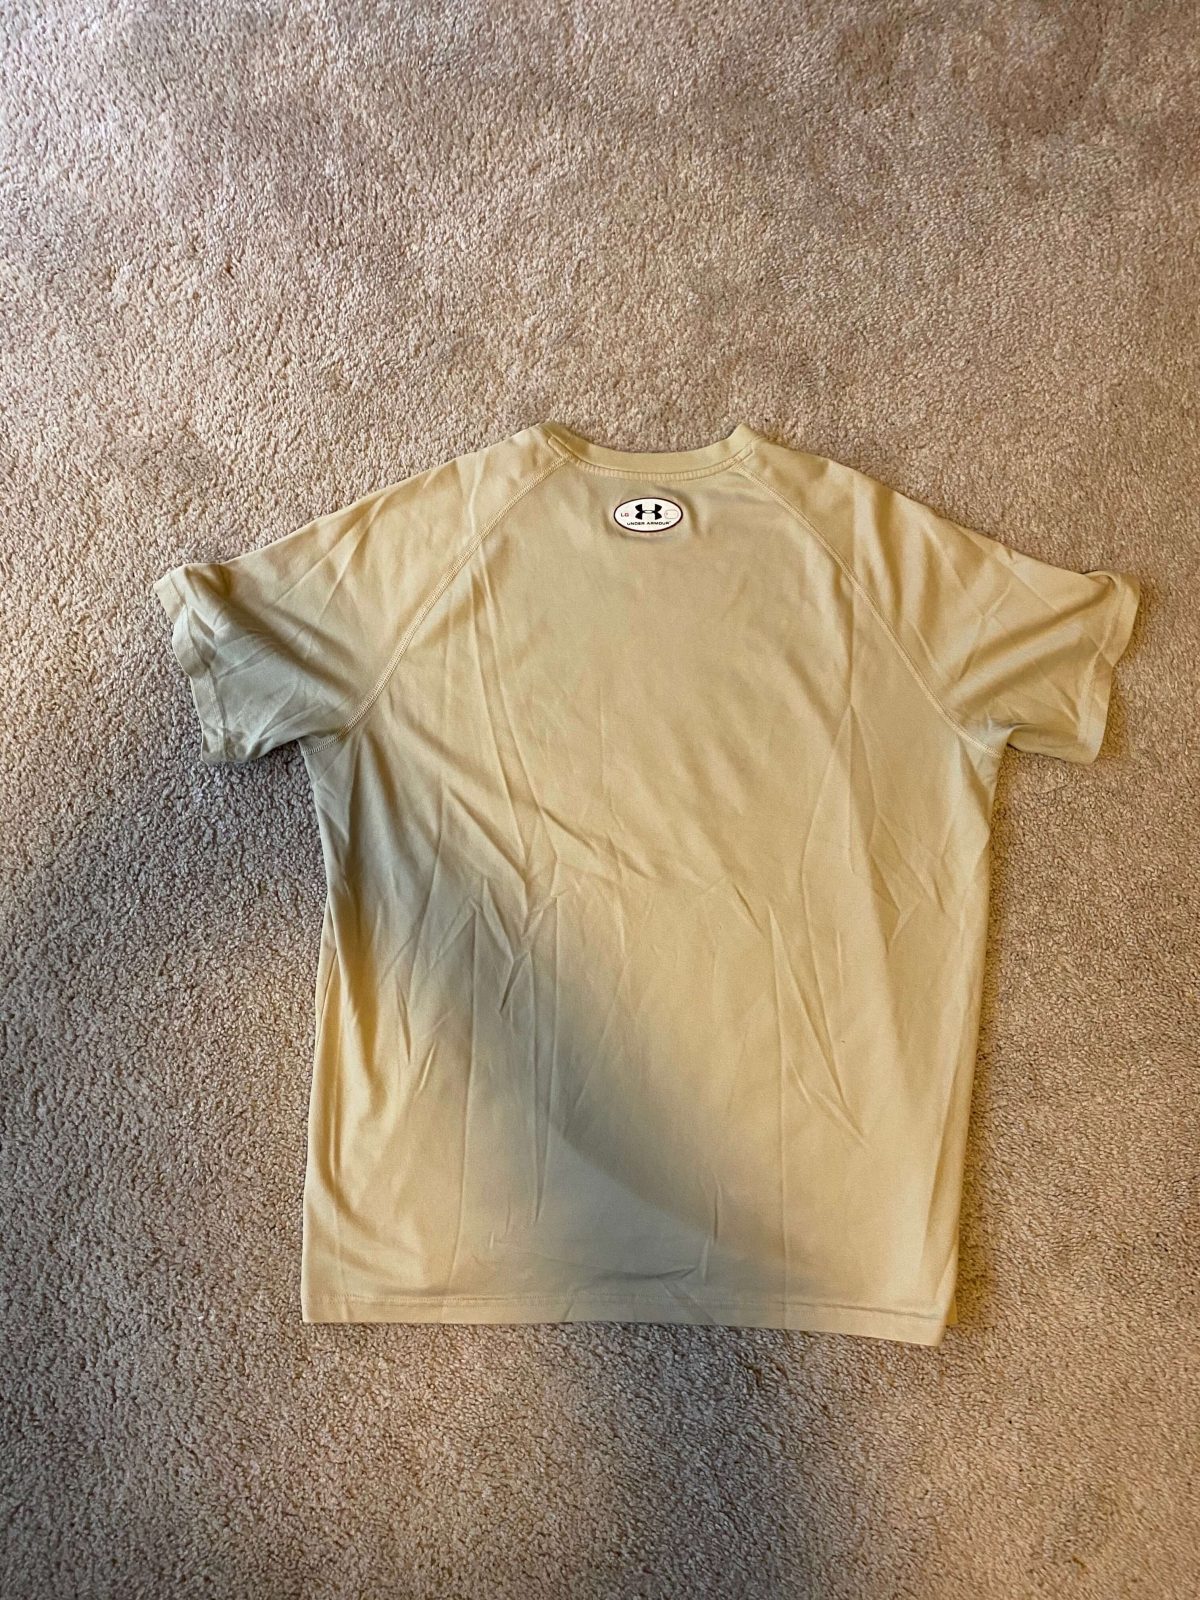 Notre Dame Baseball Shirt : NARP Clothing